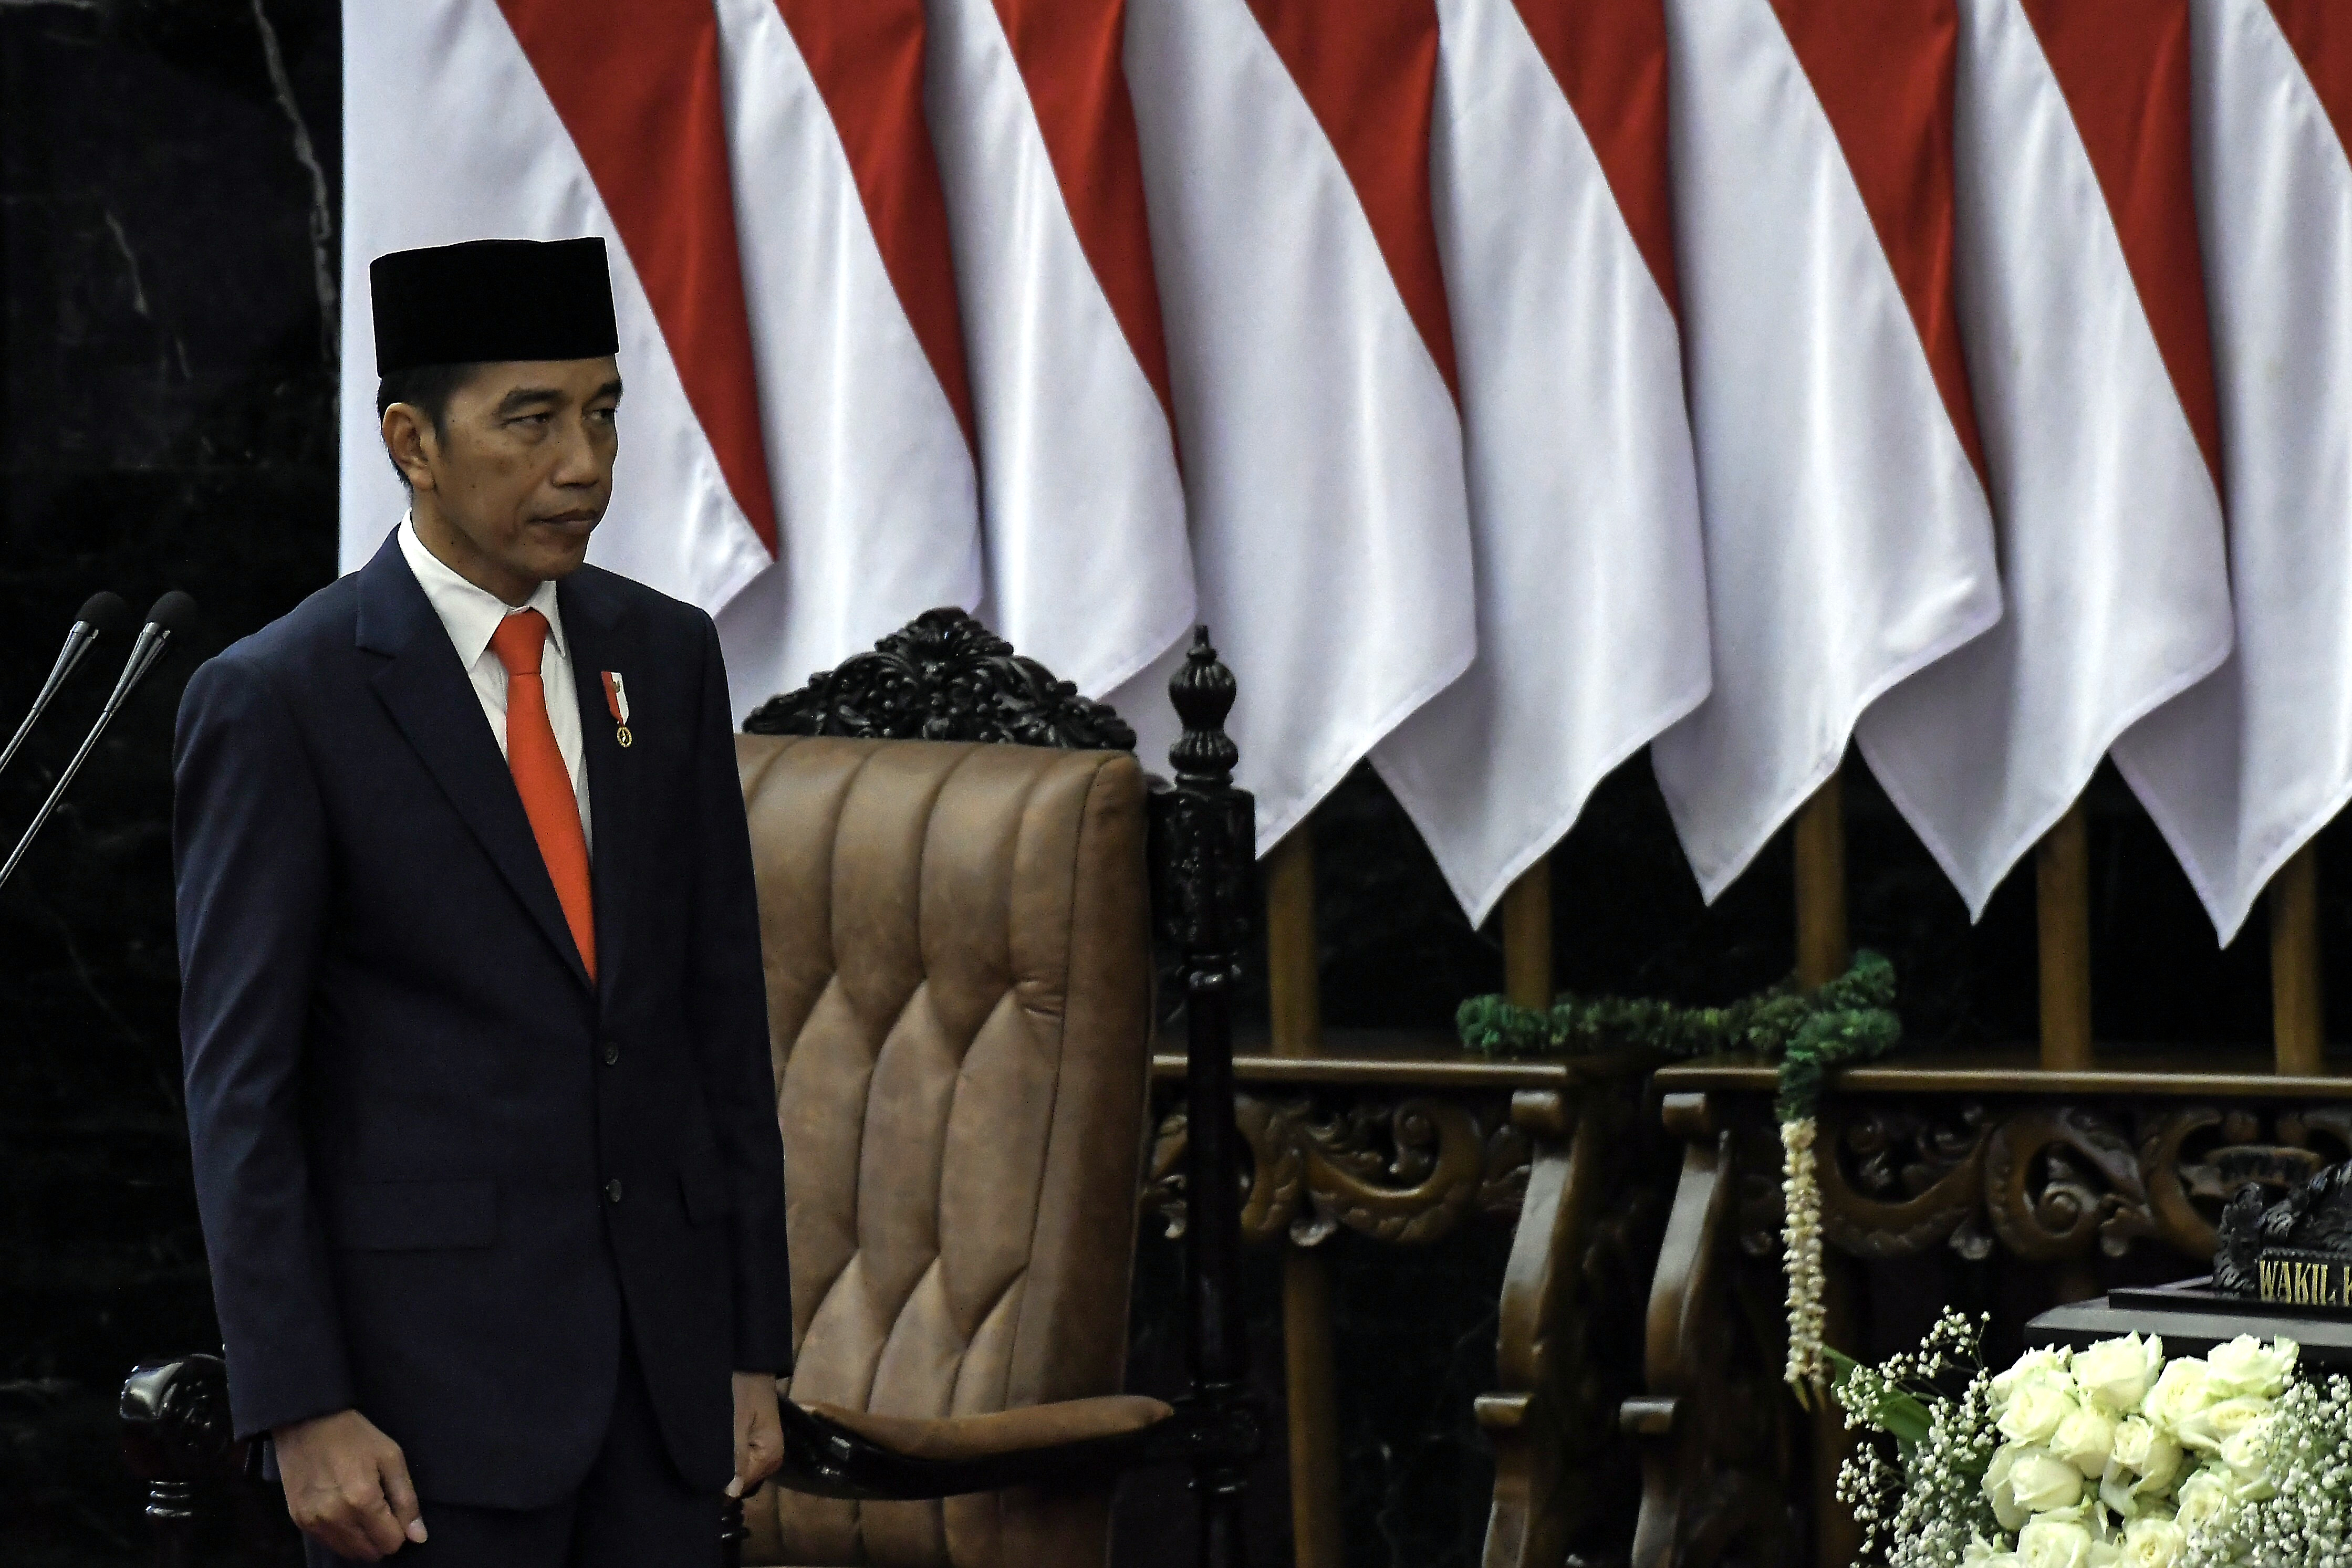 Indonesia President Joko Widodo at the swearing-in ceremony